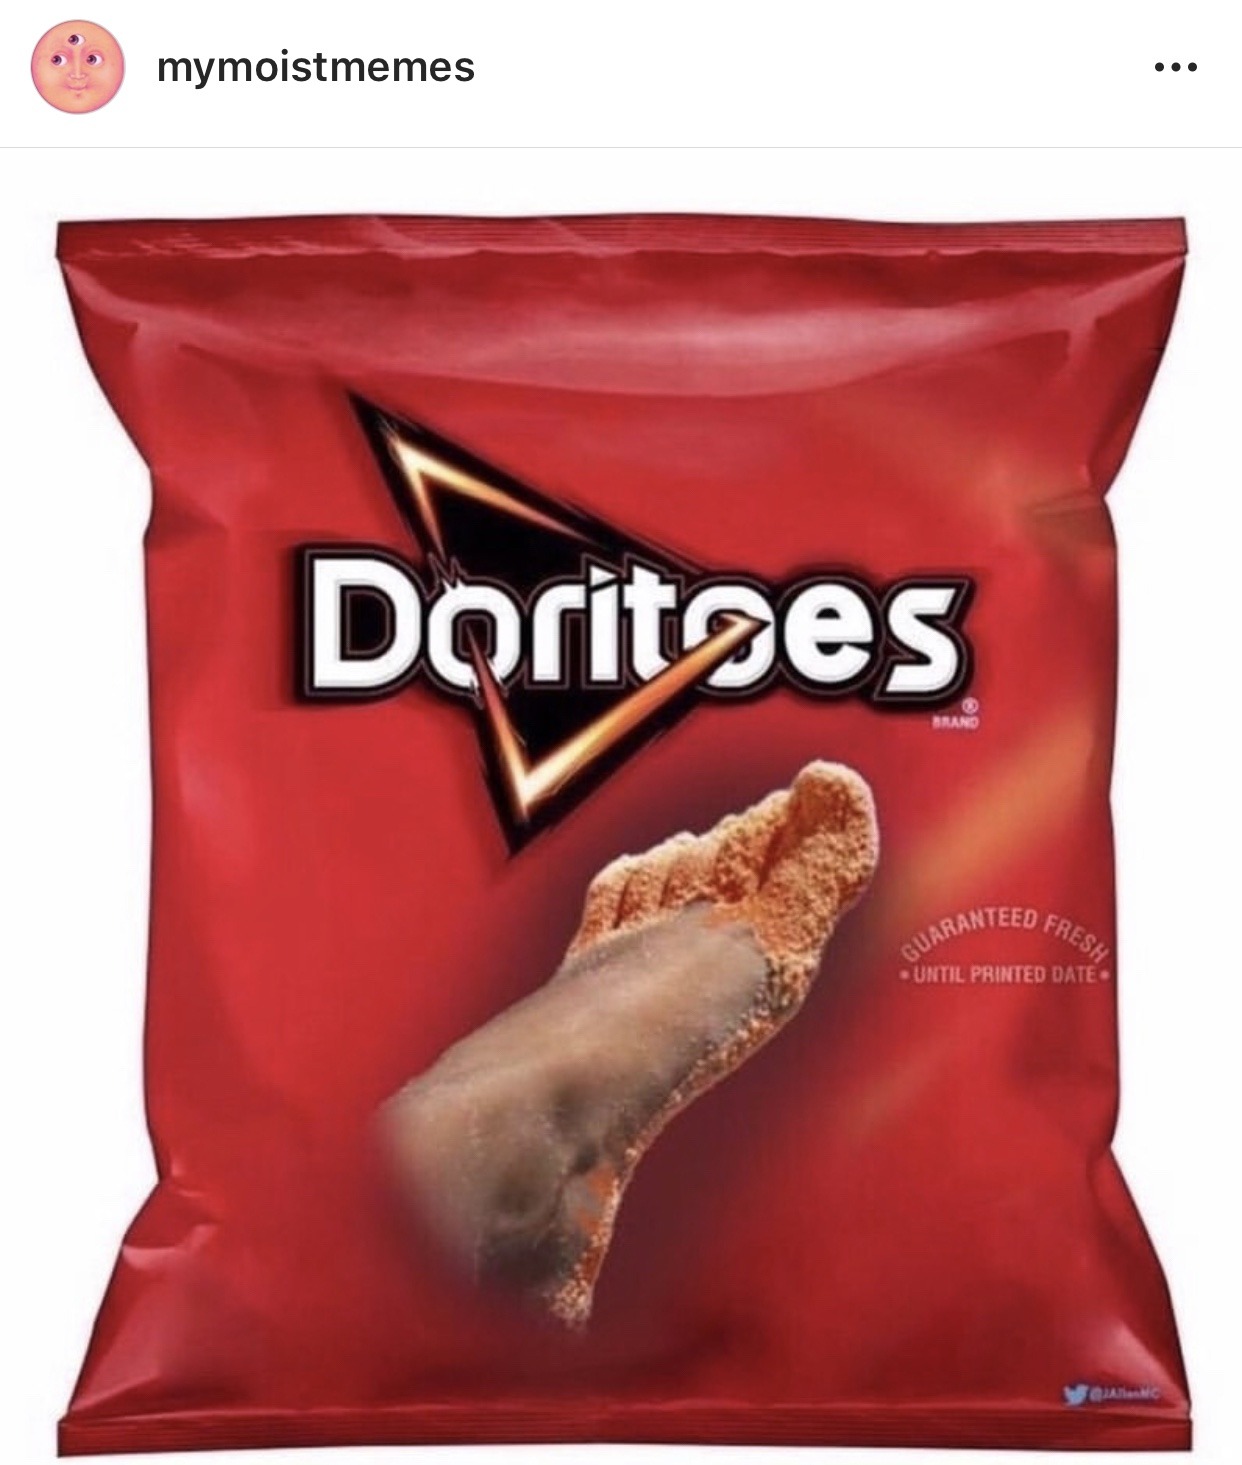 bag of chips - mymoistmemes Doritges Ed Fresh Guaranteed Until Printed Date